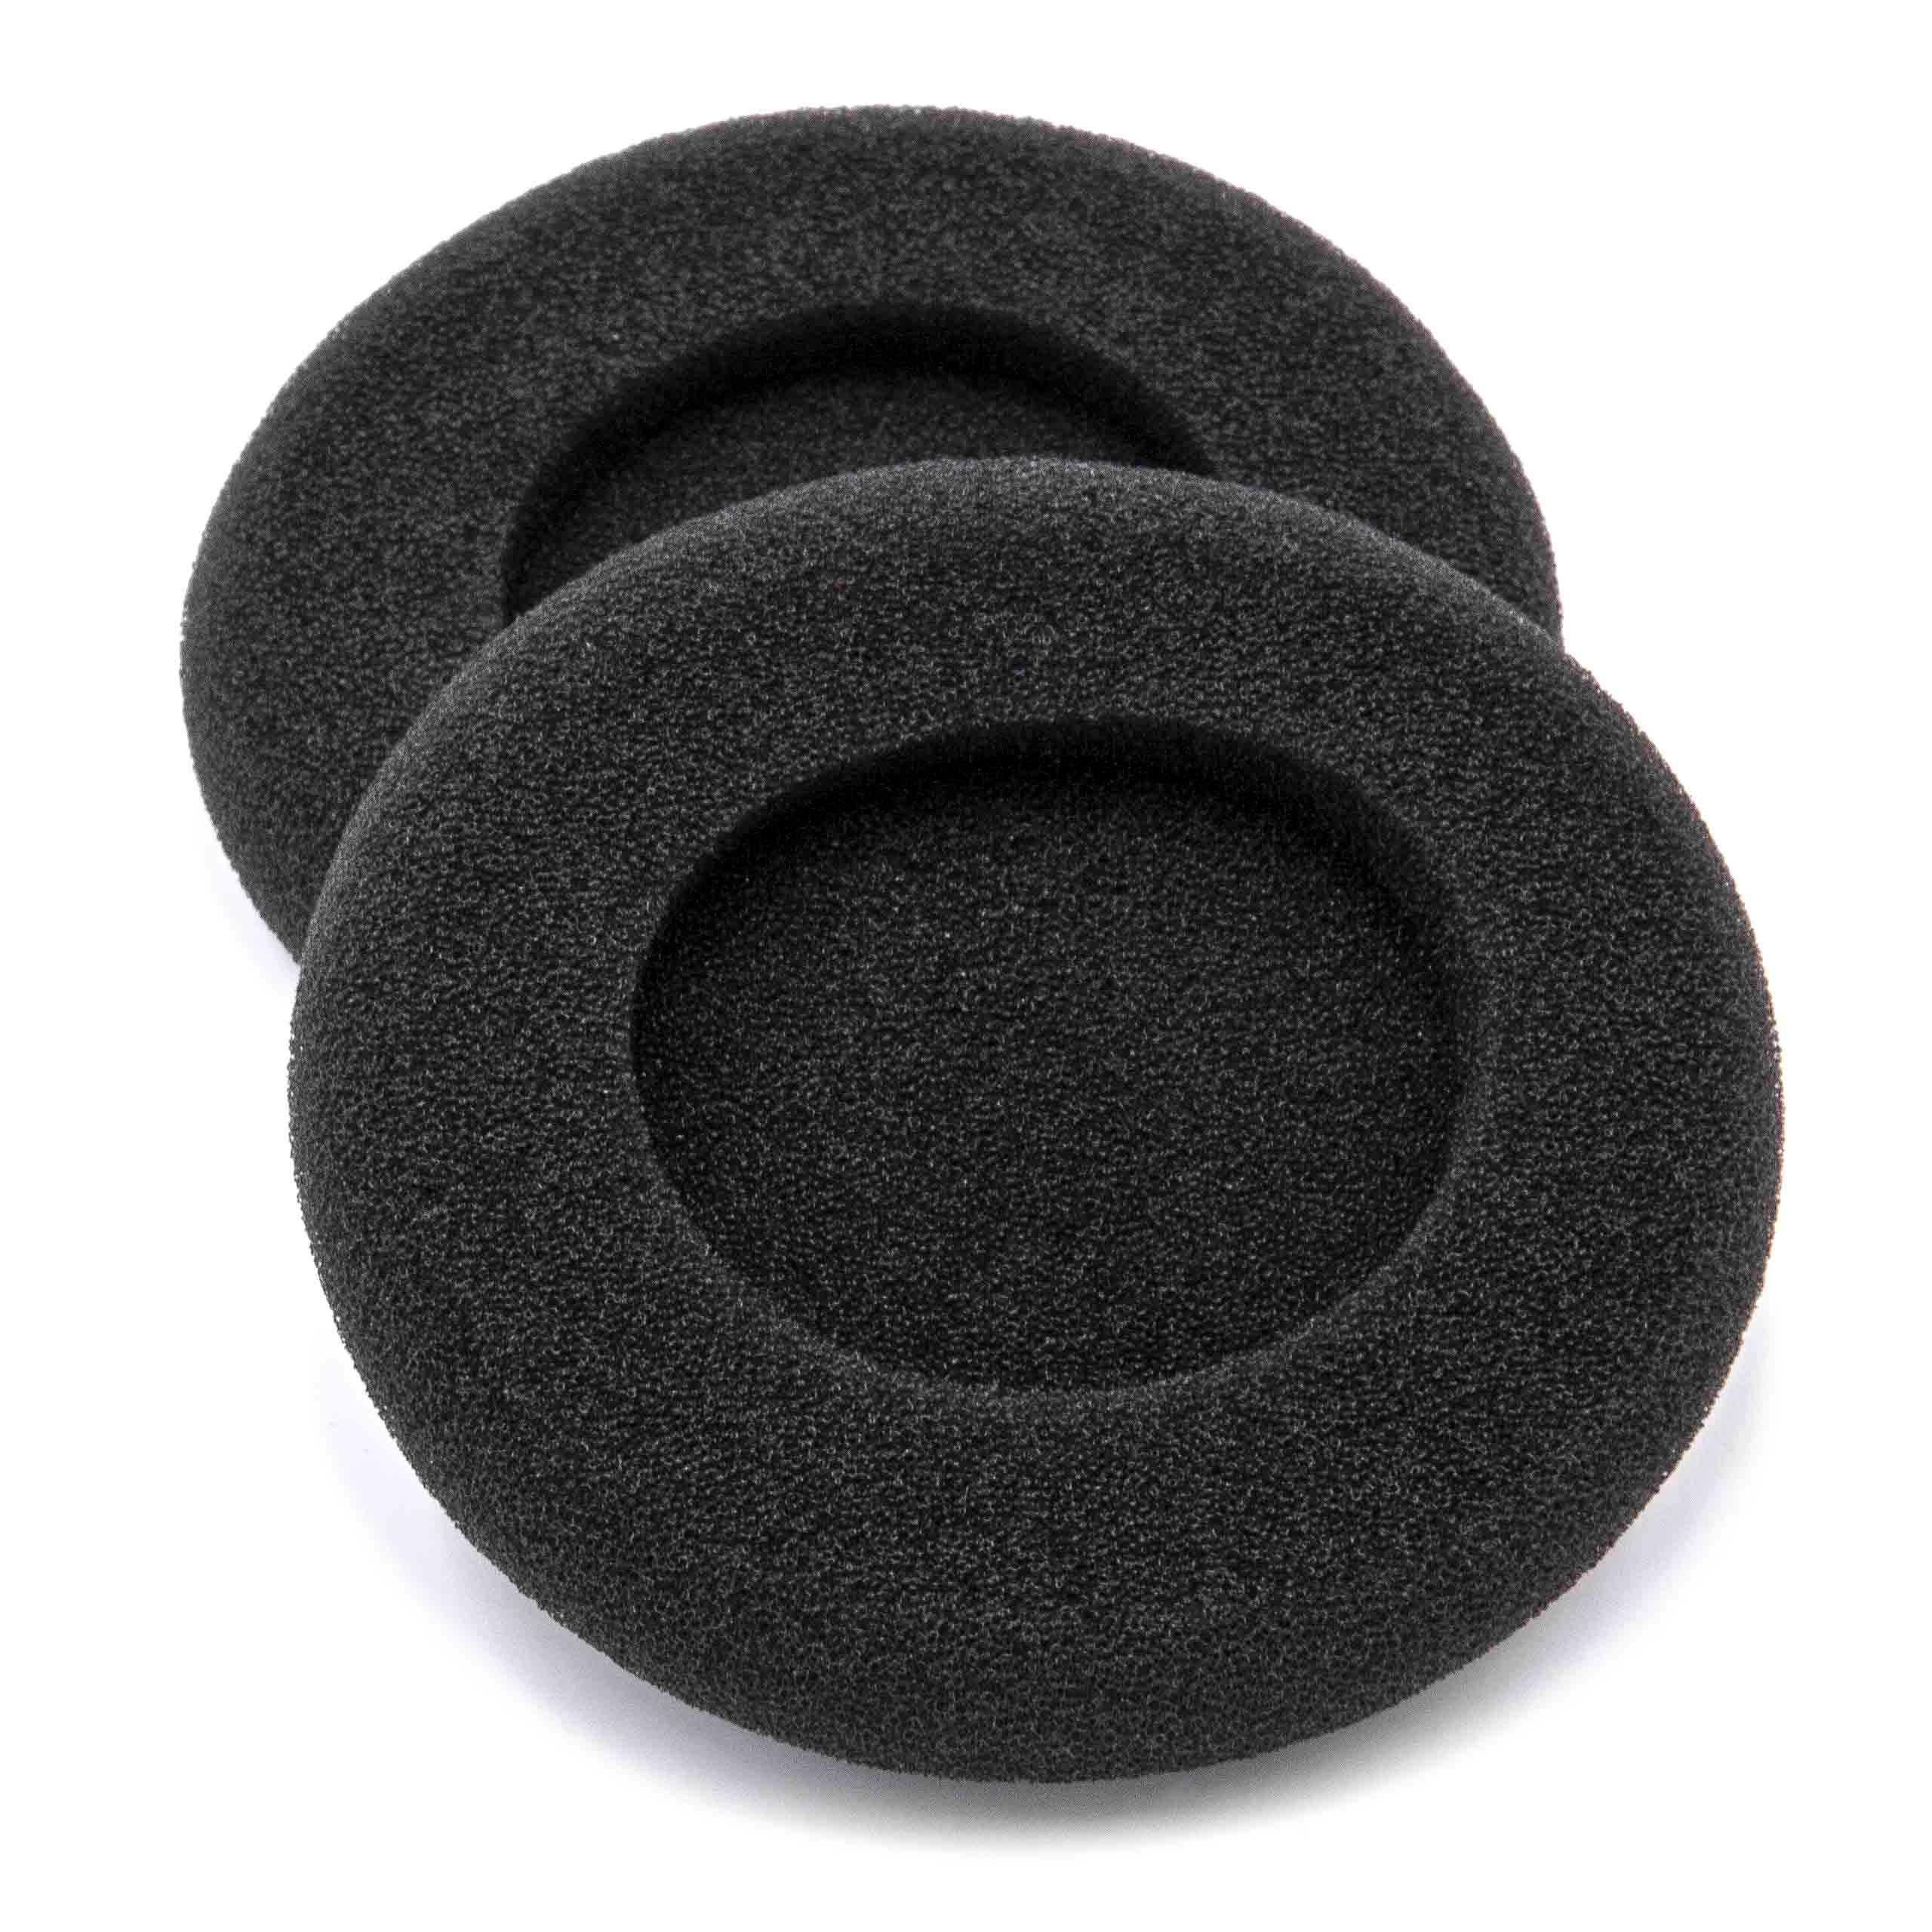 2x Ear Pads suitable for Sennheiser / Koss ATH ES5 VM55 Headphones etc. - foam